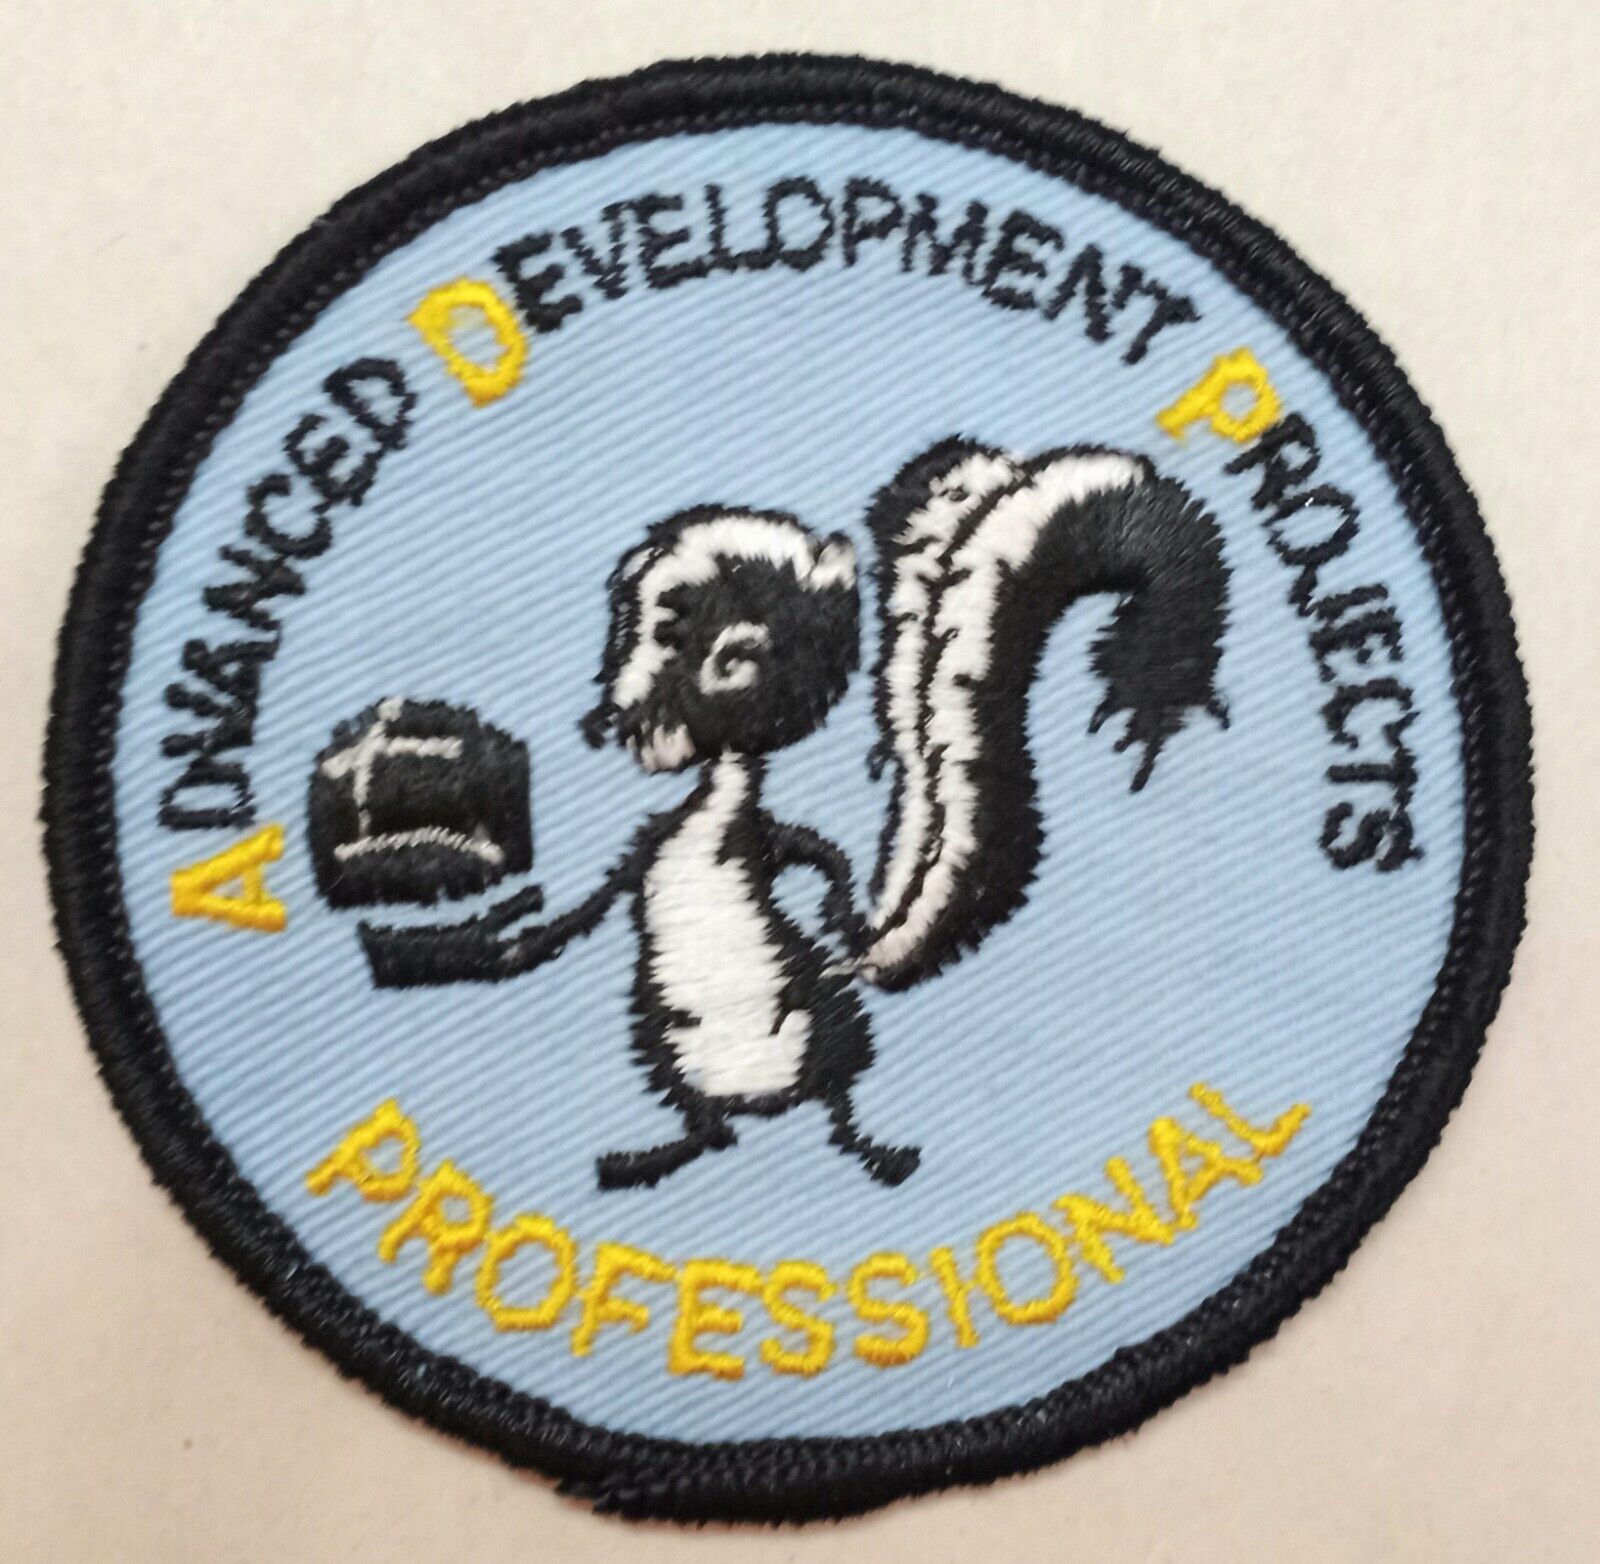 Vintage LOCKHEED Skunk Works PATCH sew on USAF ADP Advanced Development Projects